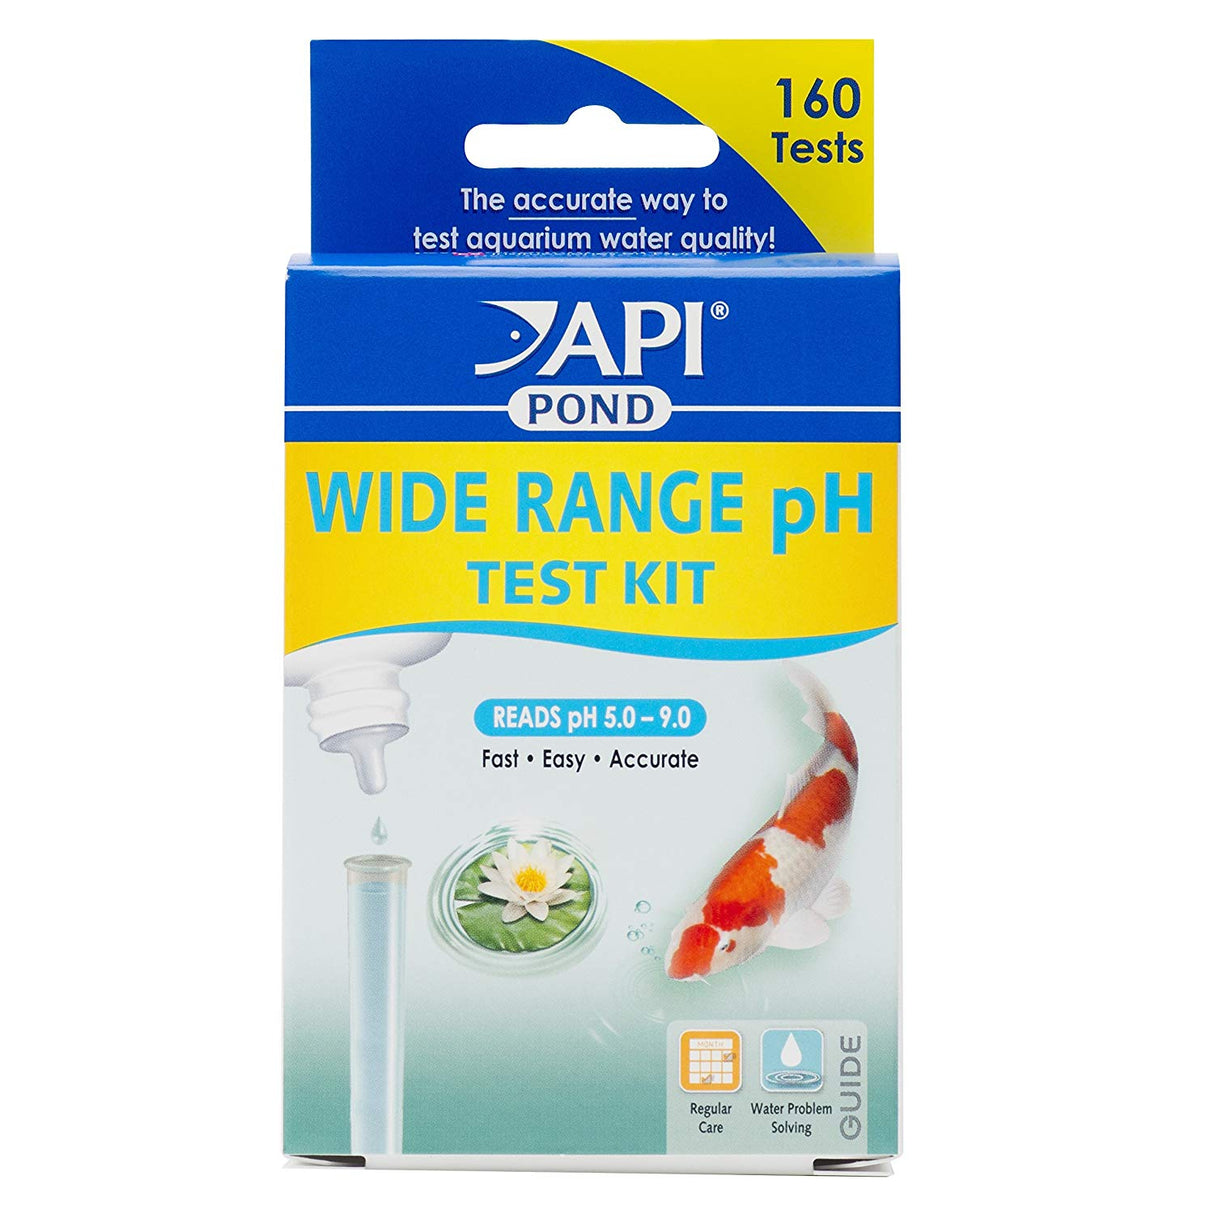 API Pond Wide Range pH Test Kit Reads pH 5.0 to 9.0 - PetMountain.com